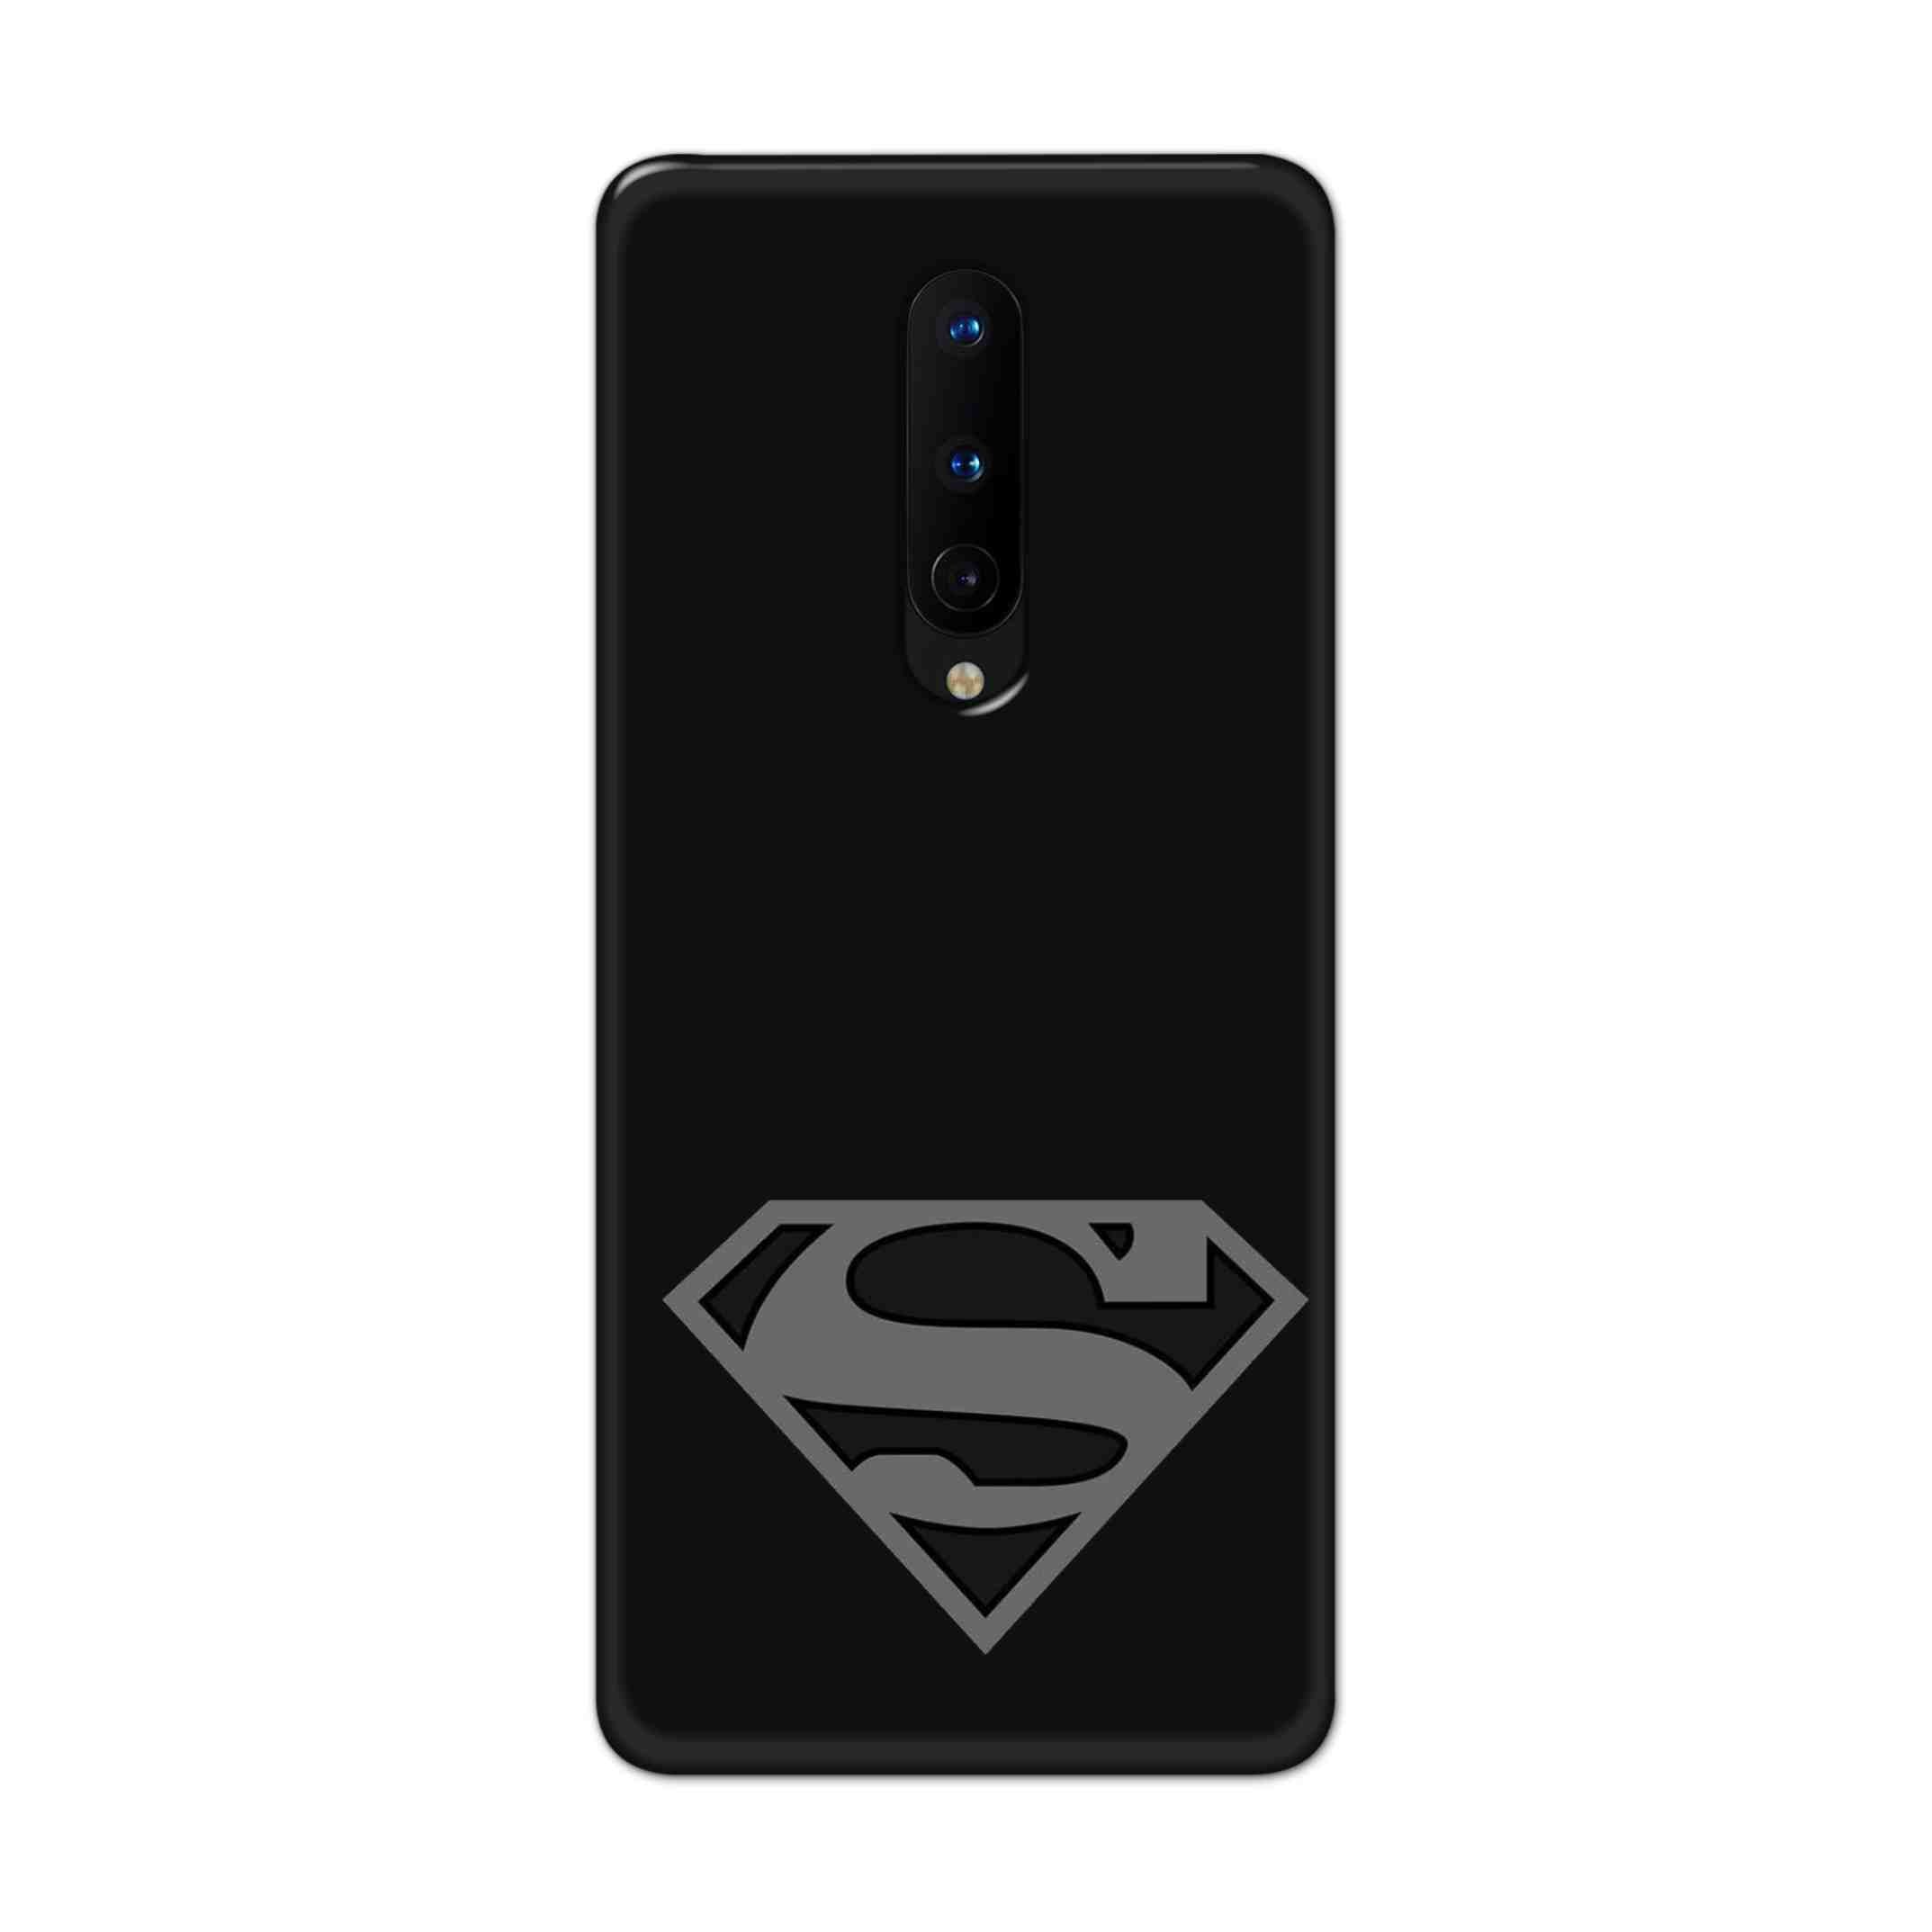 Buy Superman Logo Hard Back Mobile Phone Case Cover For OnePlus 8 Online